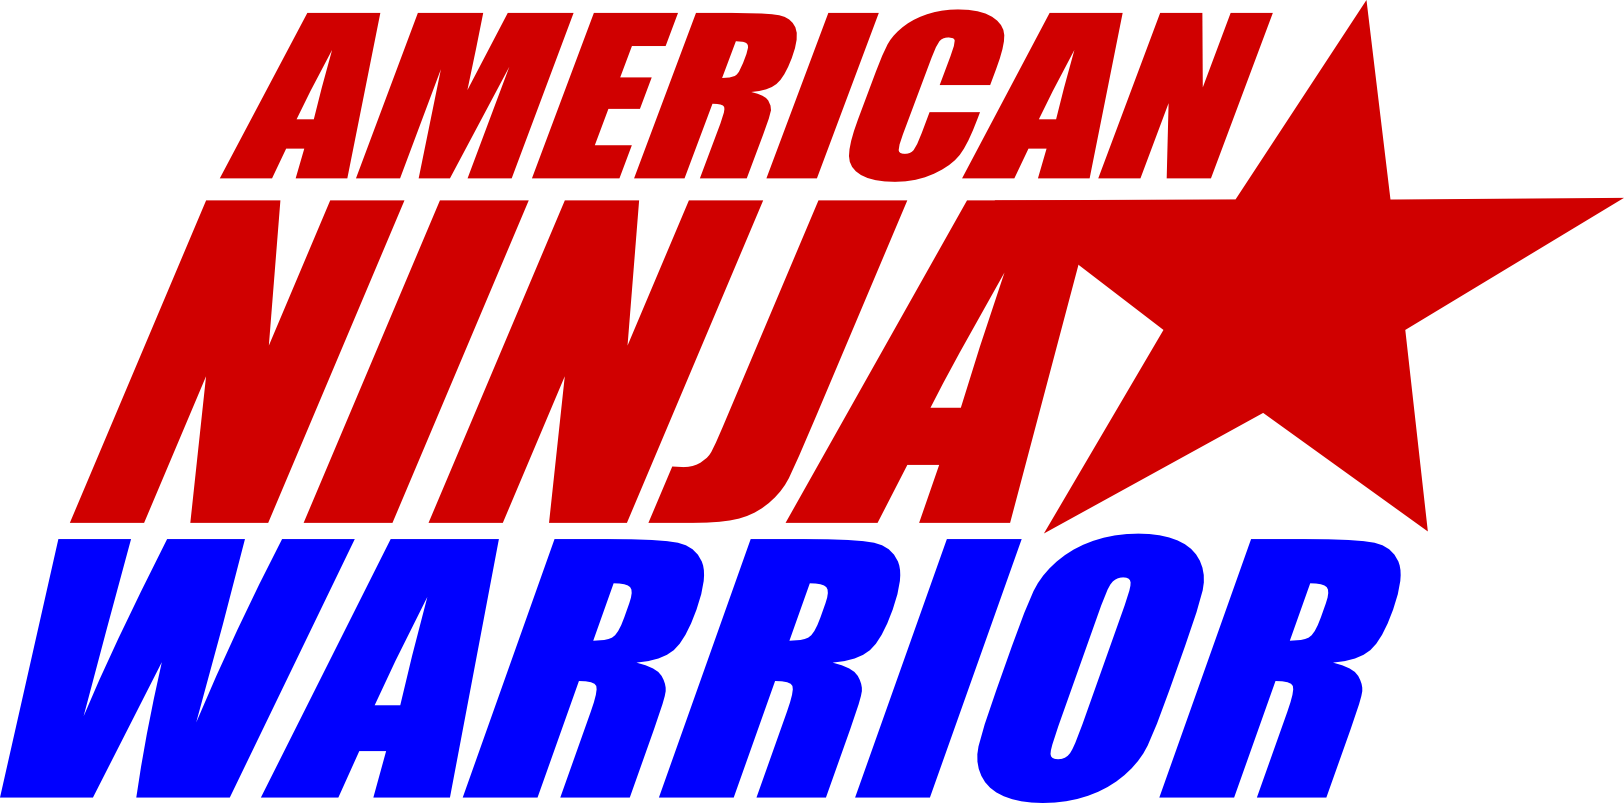 American Ninja Warrior Wallpapers Top Free American Ninja Warrior Backgrounds Wallpaperaccess - american ninja warrior qualifying on roblox